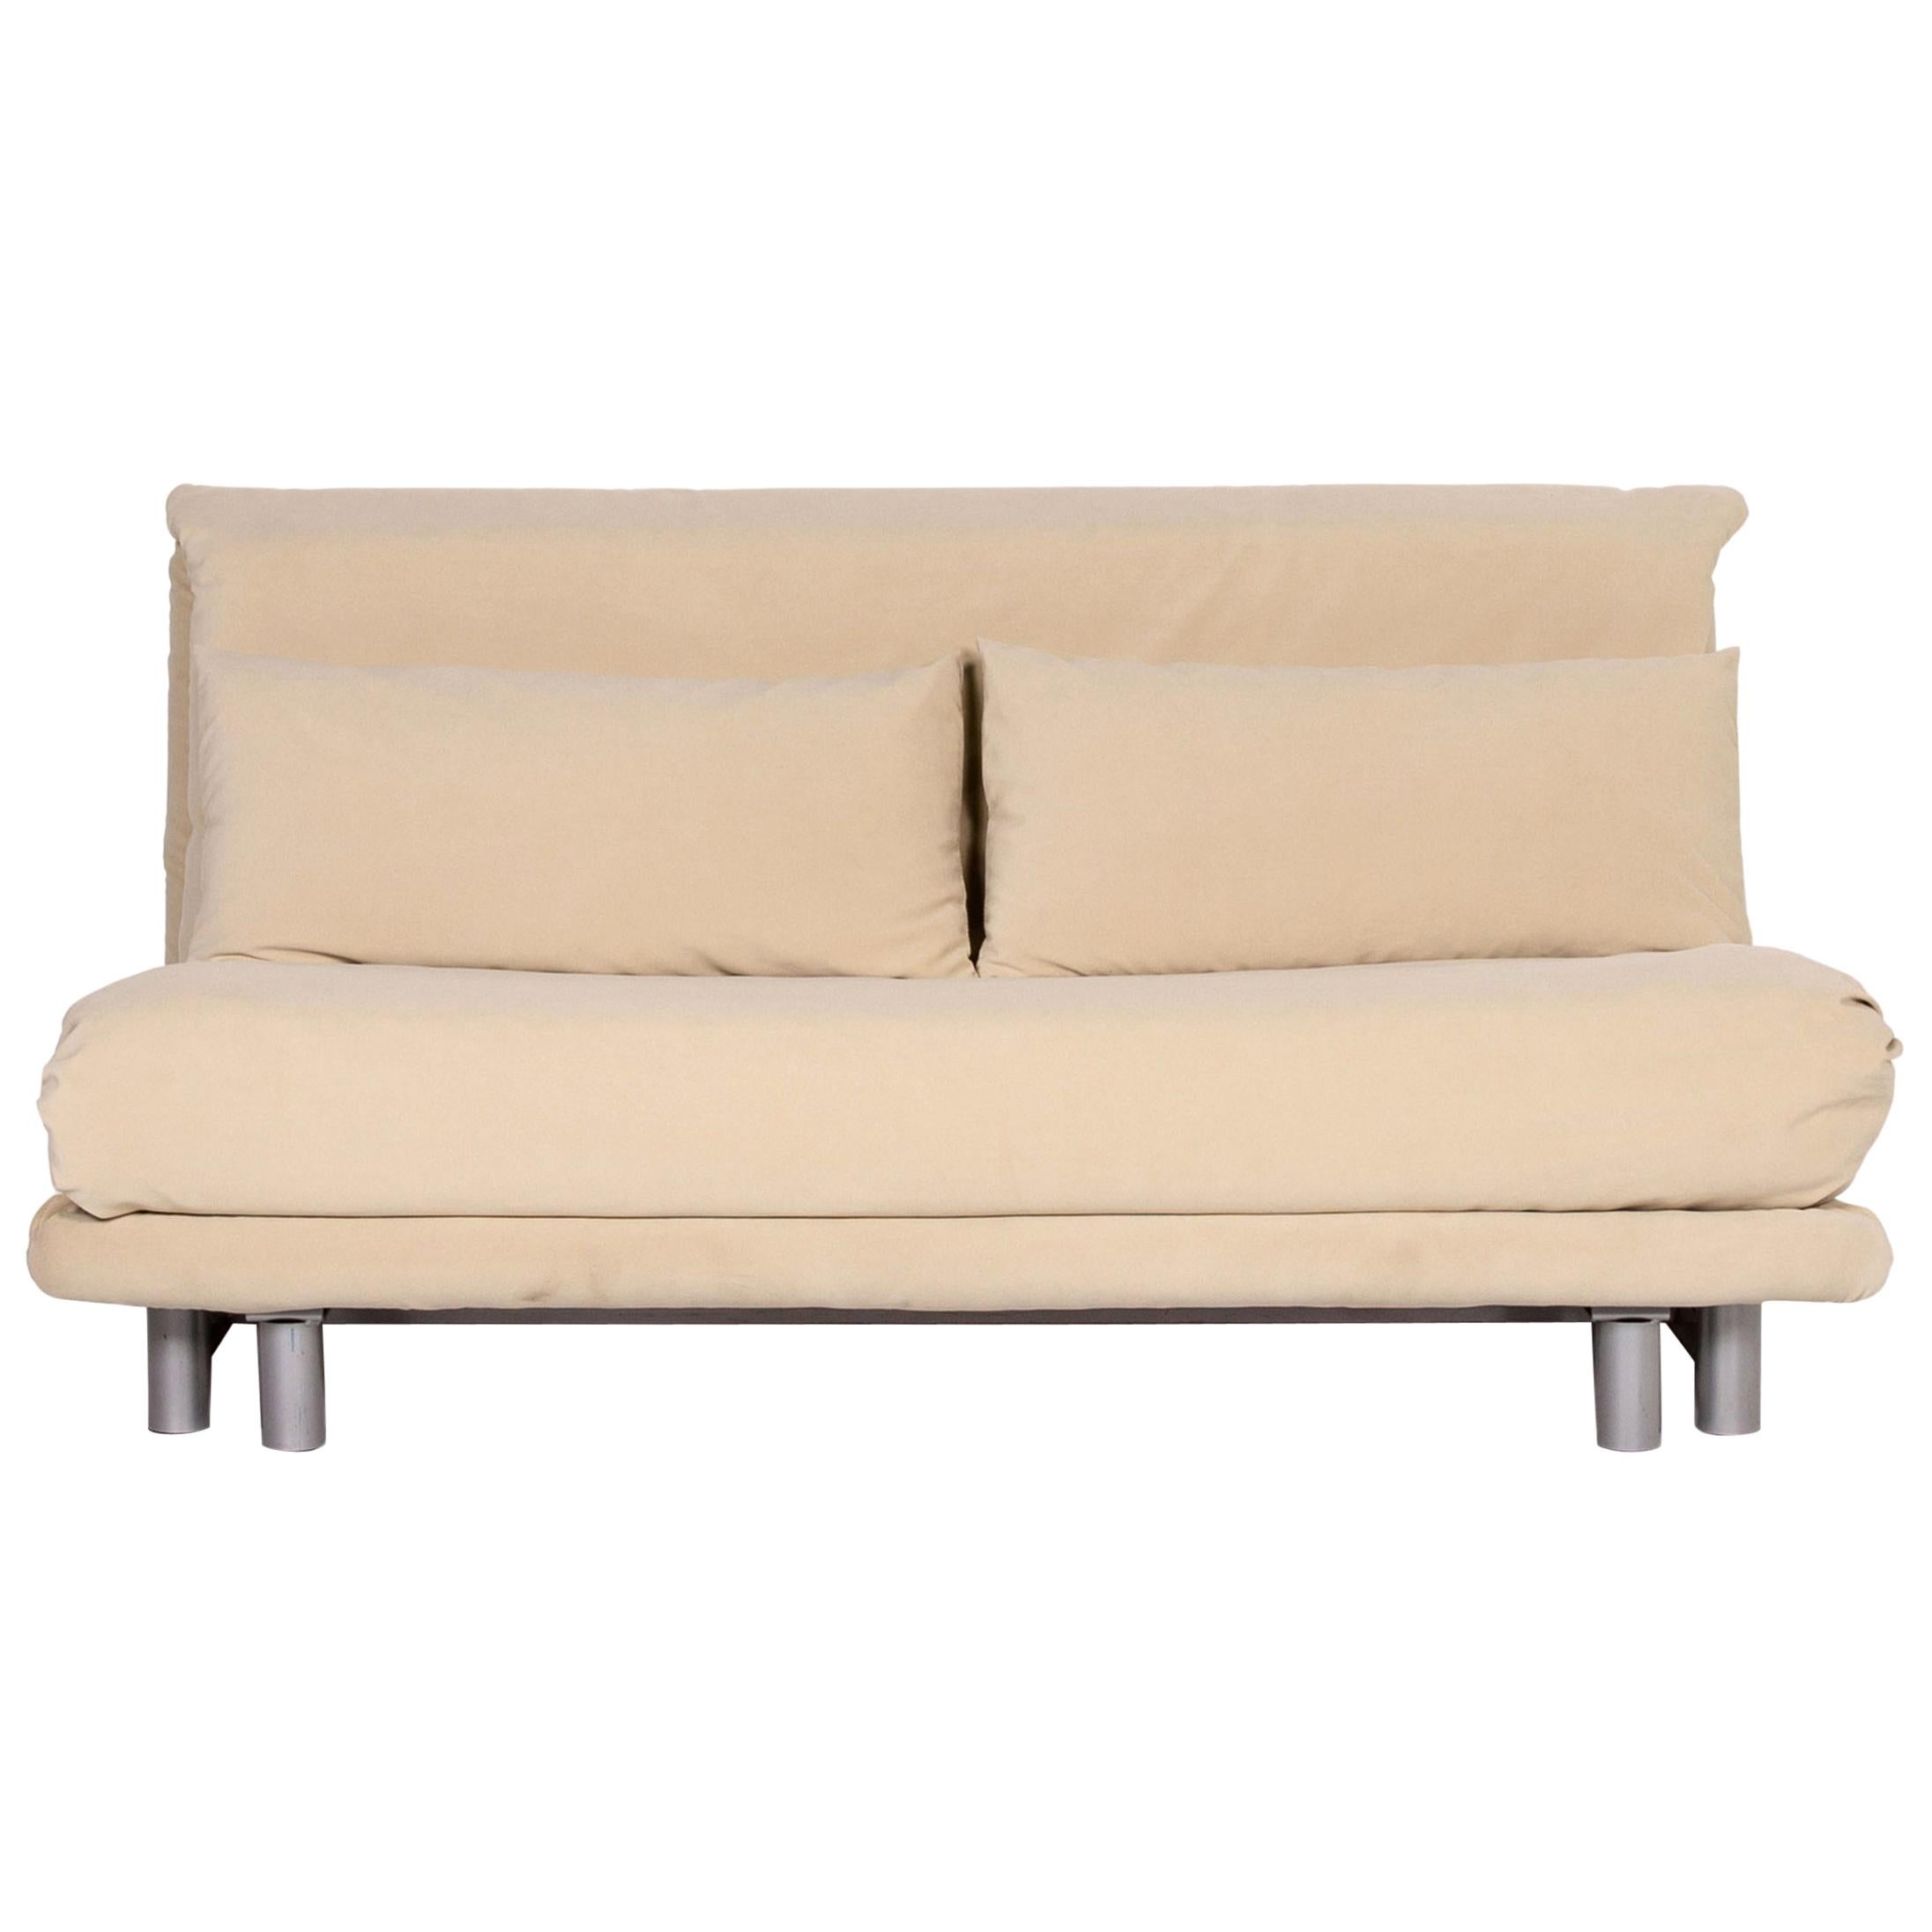 Ligne Roset Multy Fabric Sofa Bed Beige Two-Seat Sofa Function Sleeping